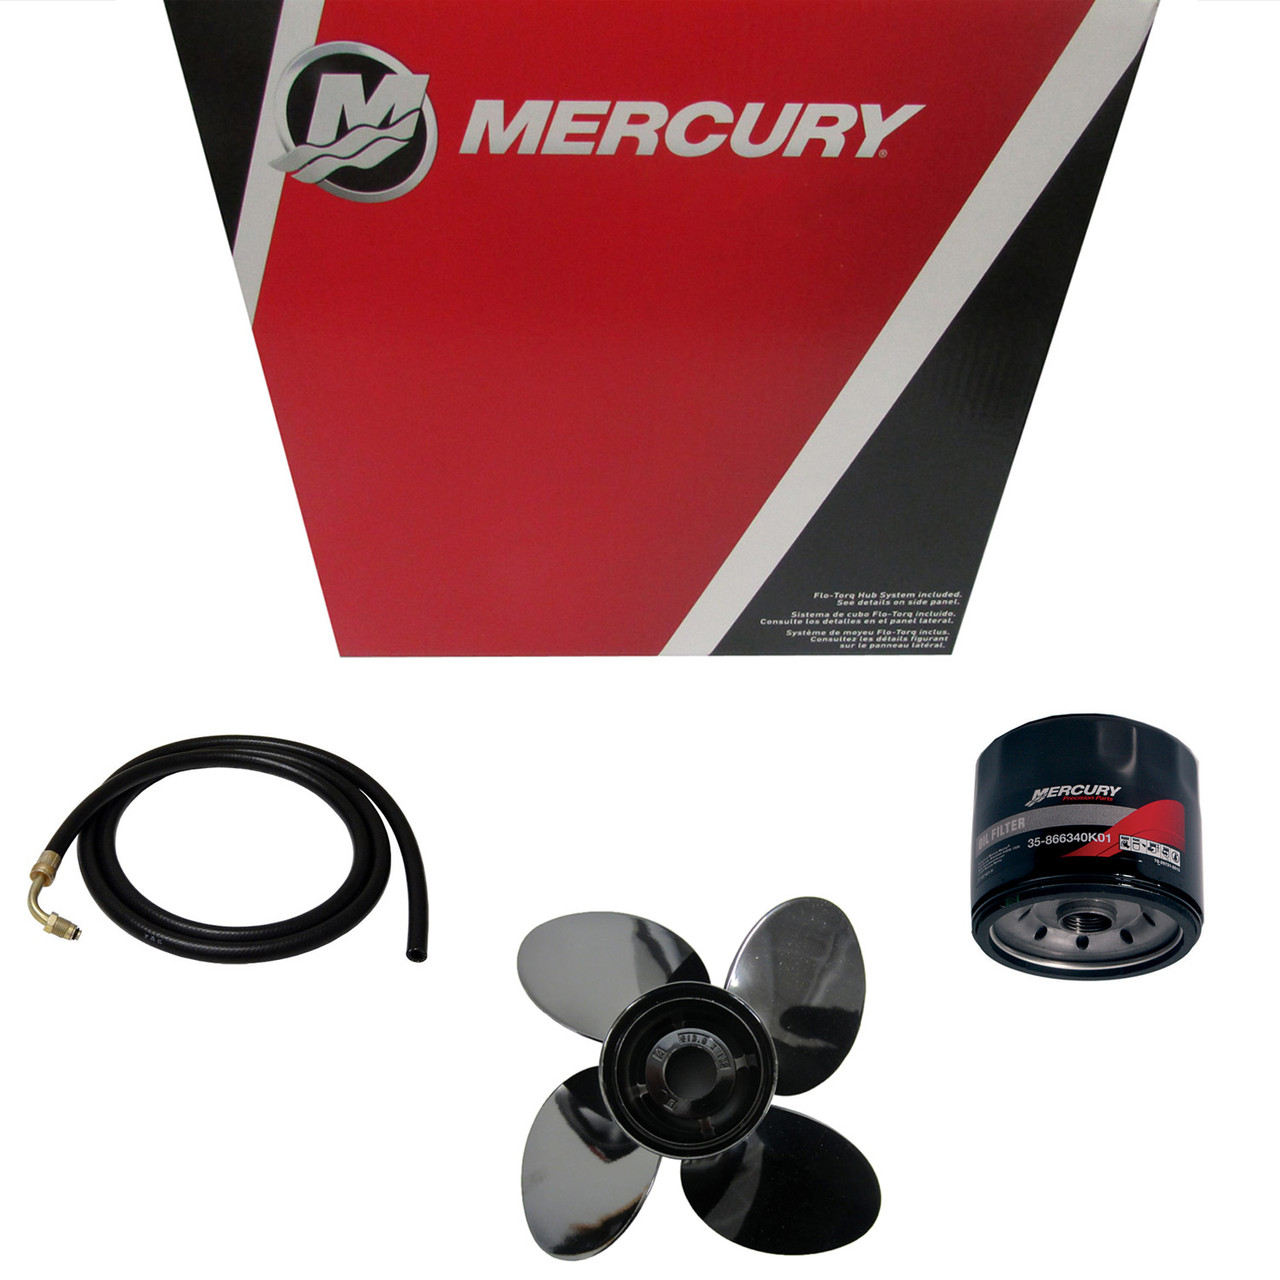 Mercury Marine / Mercruiser New OEM Spitfire 13.0R17, 8m0151362